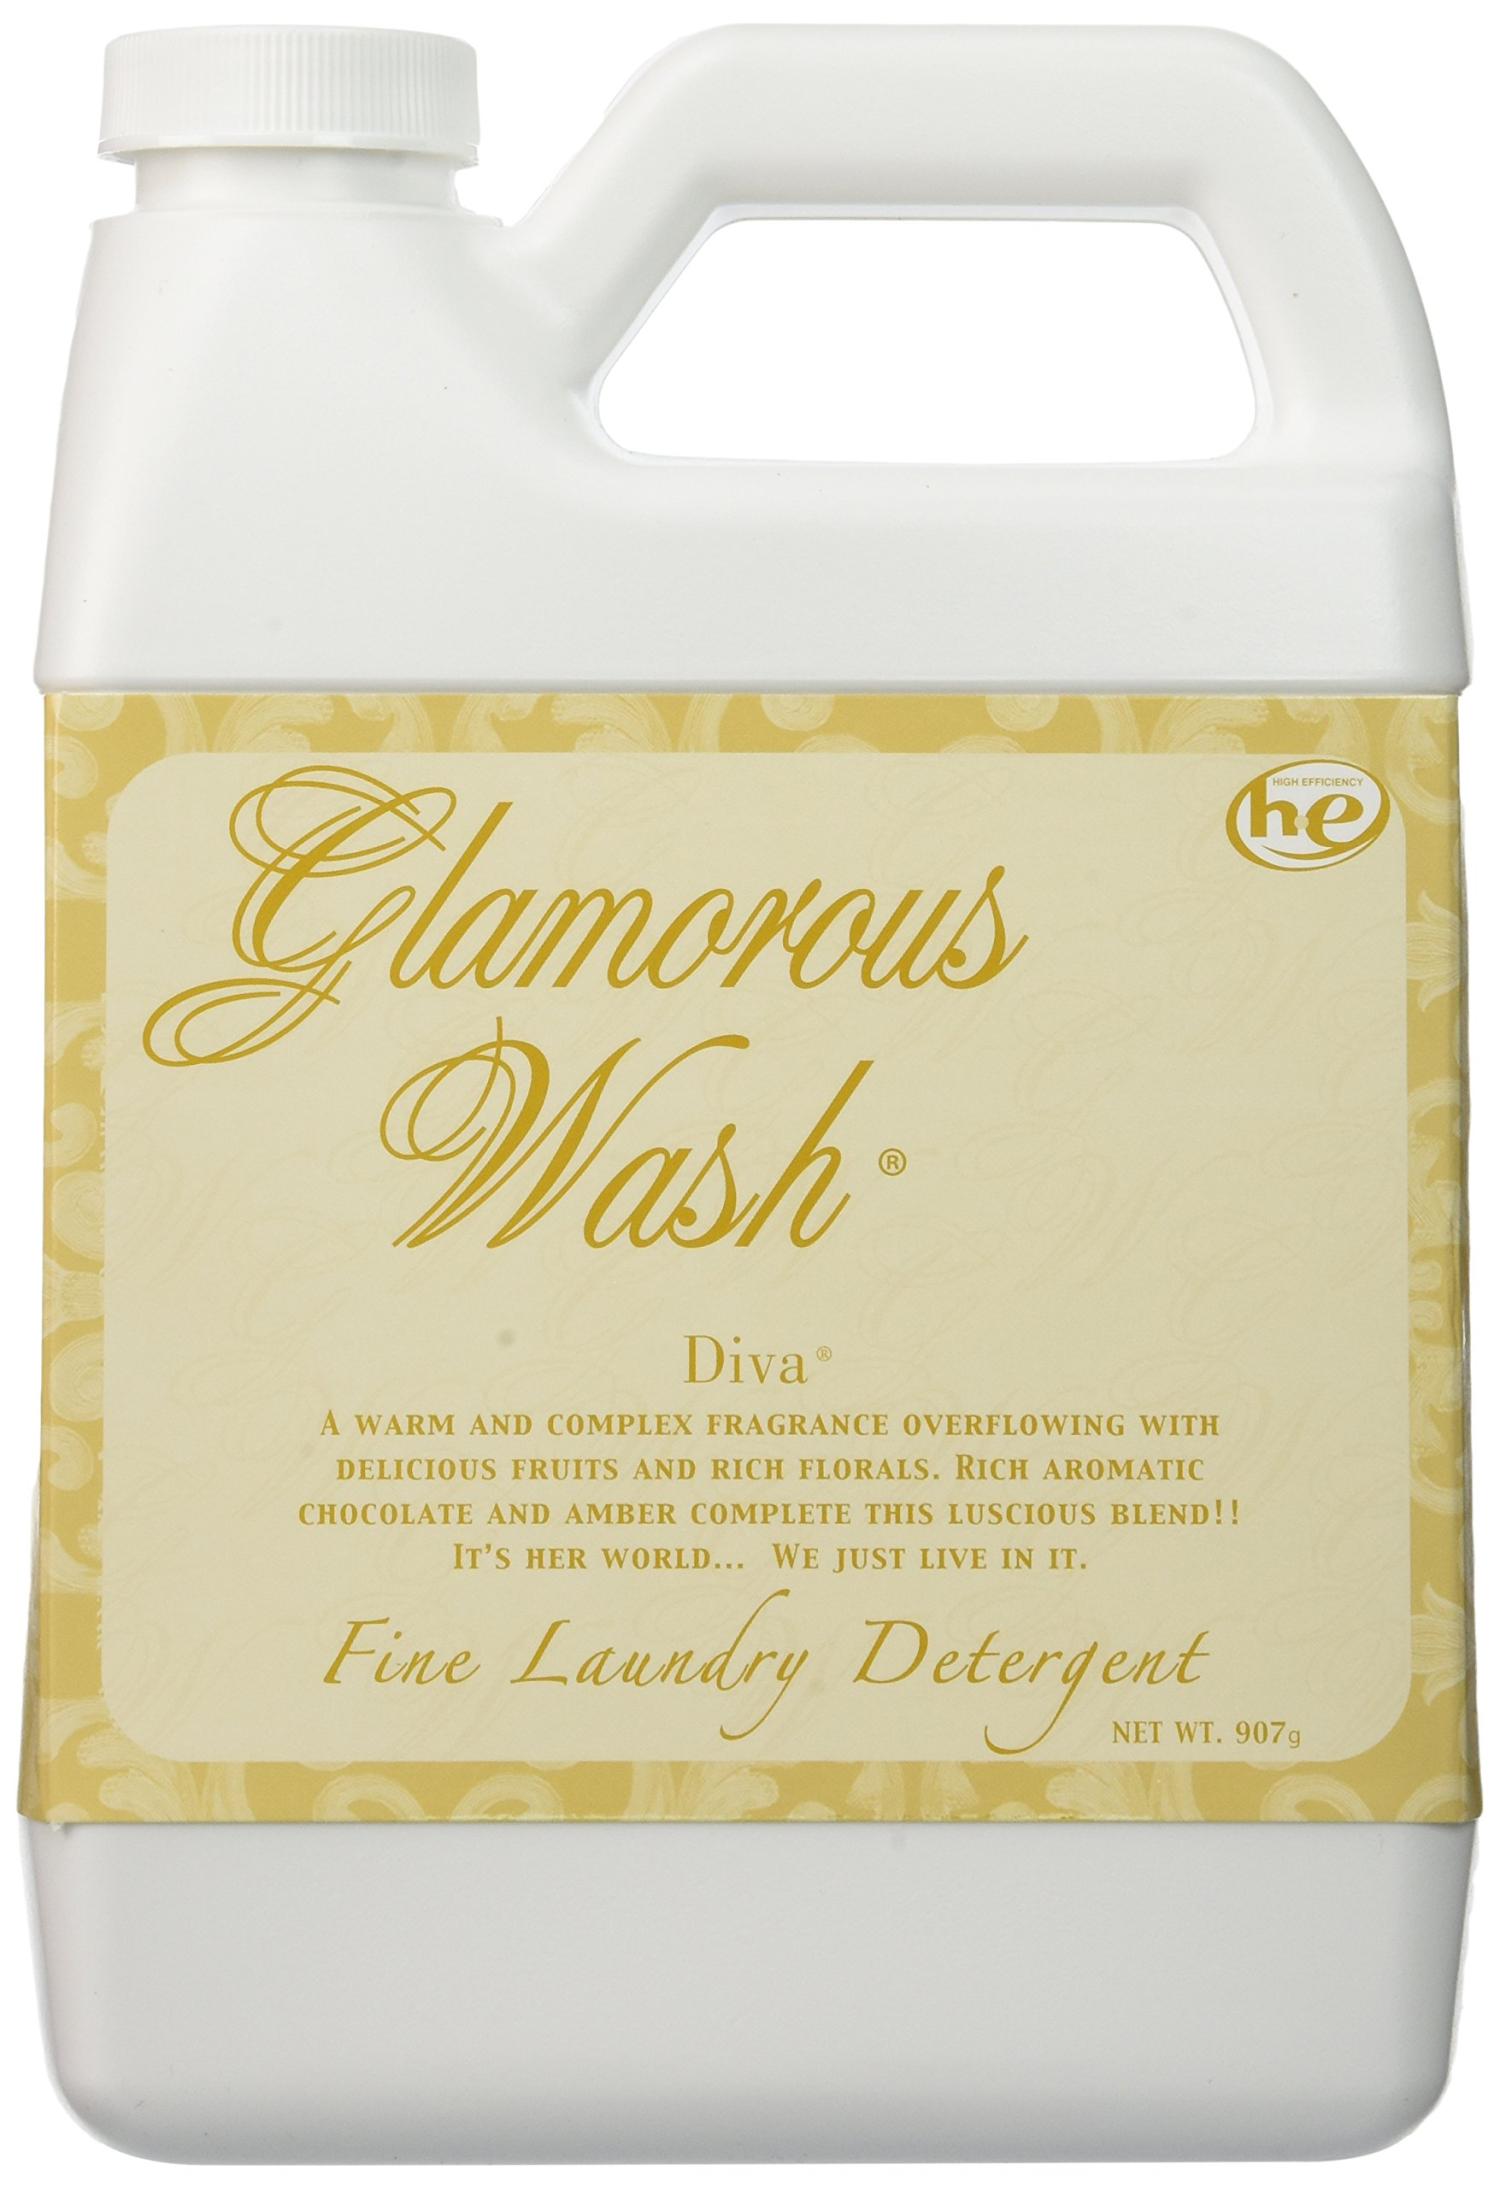 TYLER Glamorous Wash Diva 907g. Floral 32 Fl Oz (Pack of 1)